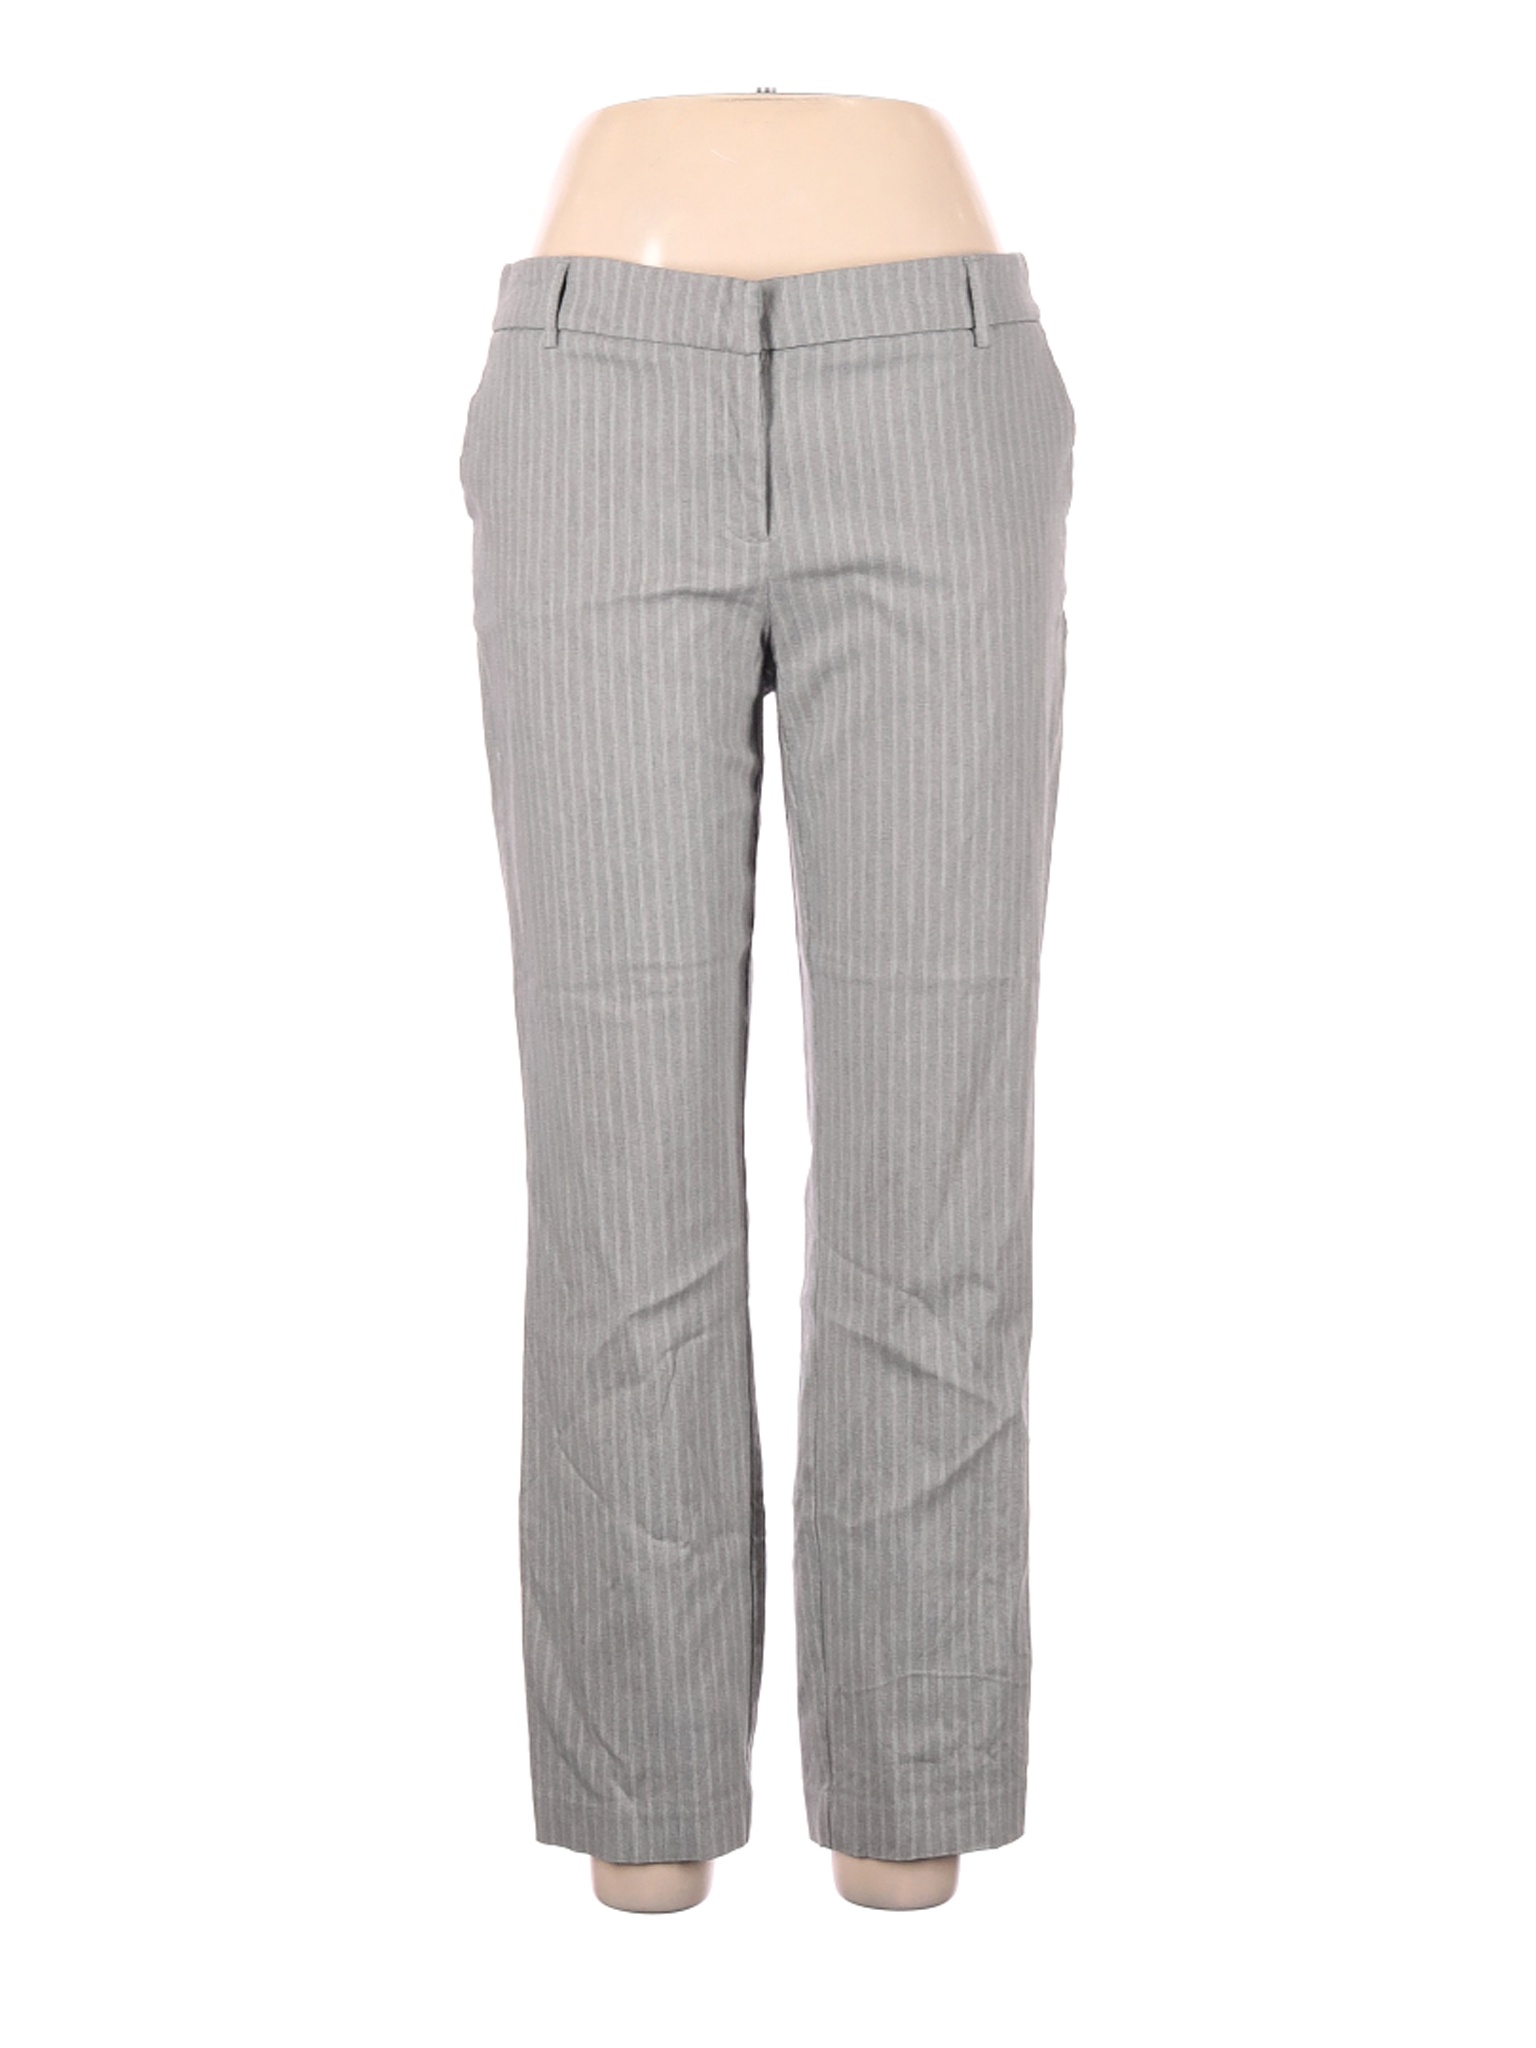 Dalia Women Gray Dress Pants 12 | eBay